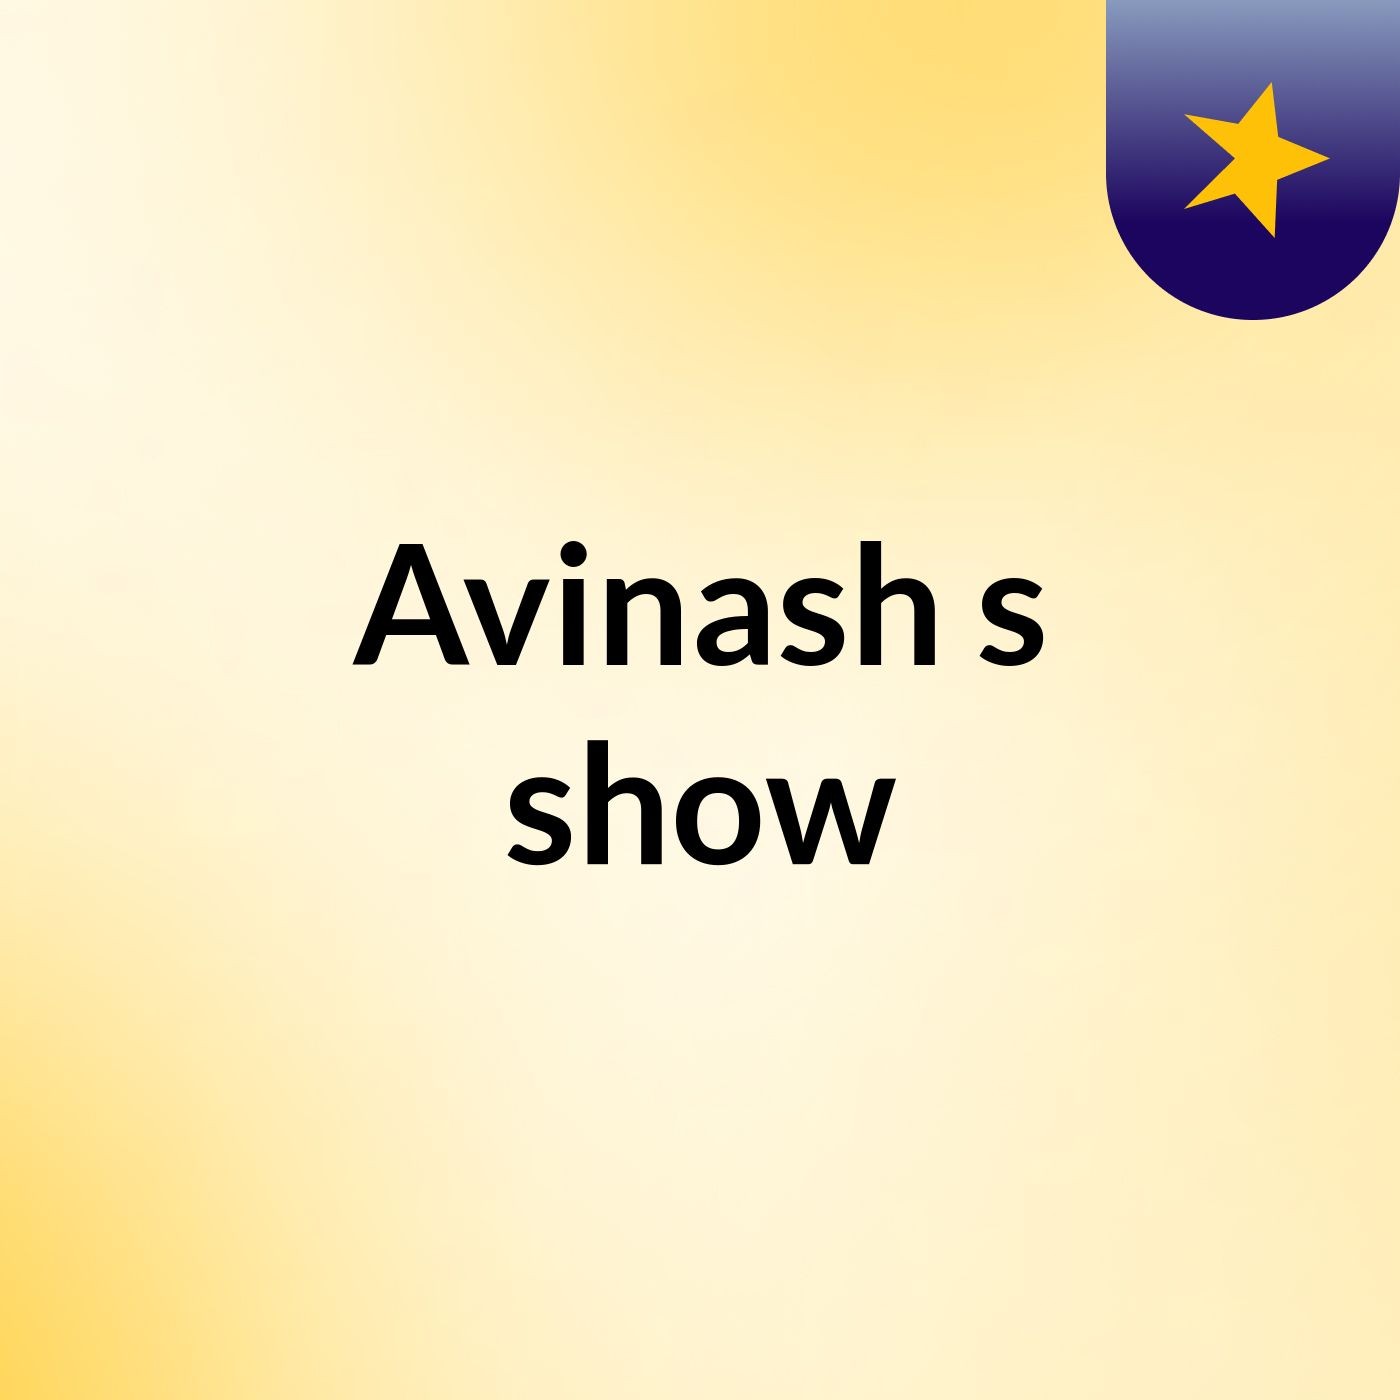 Avinash's show